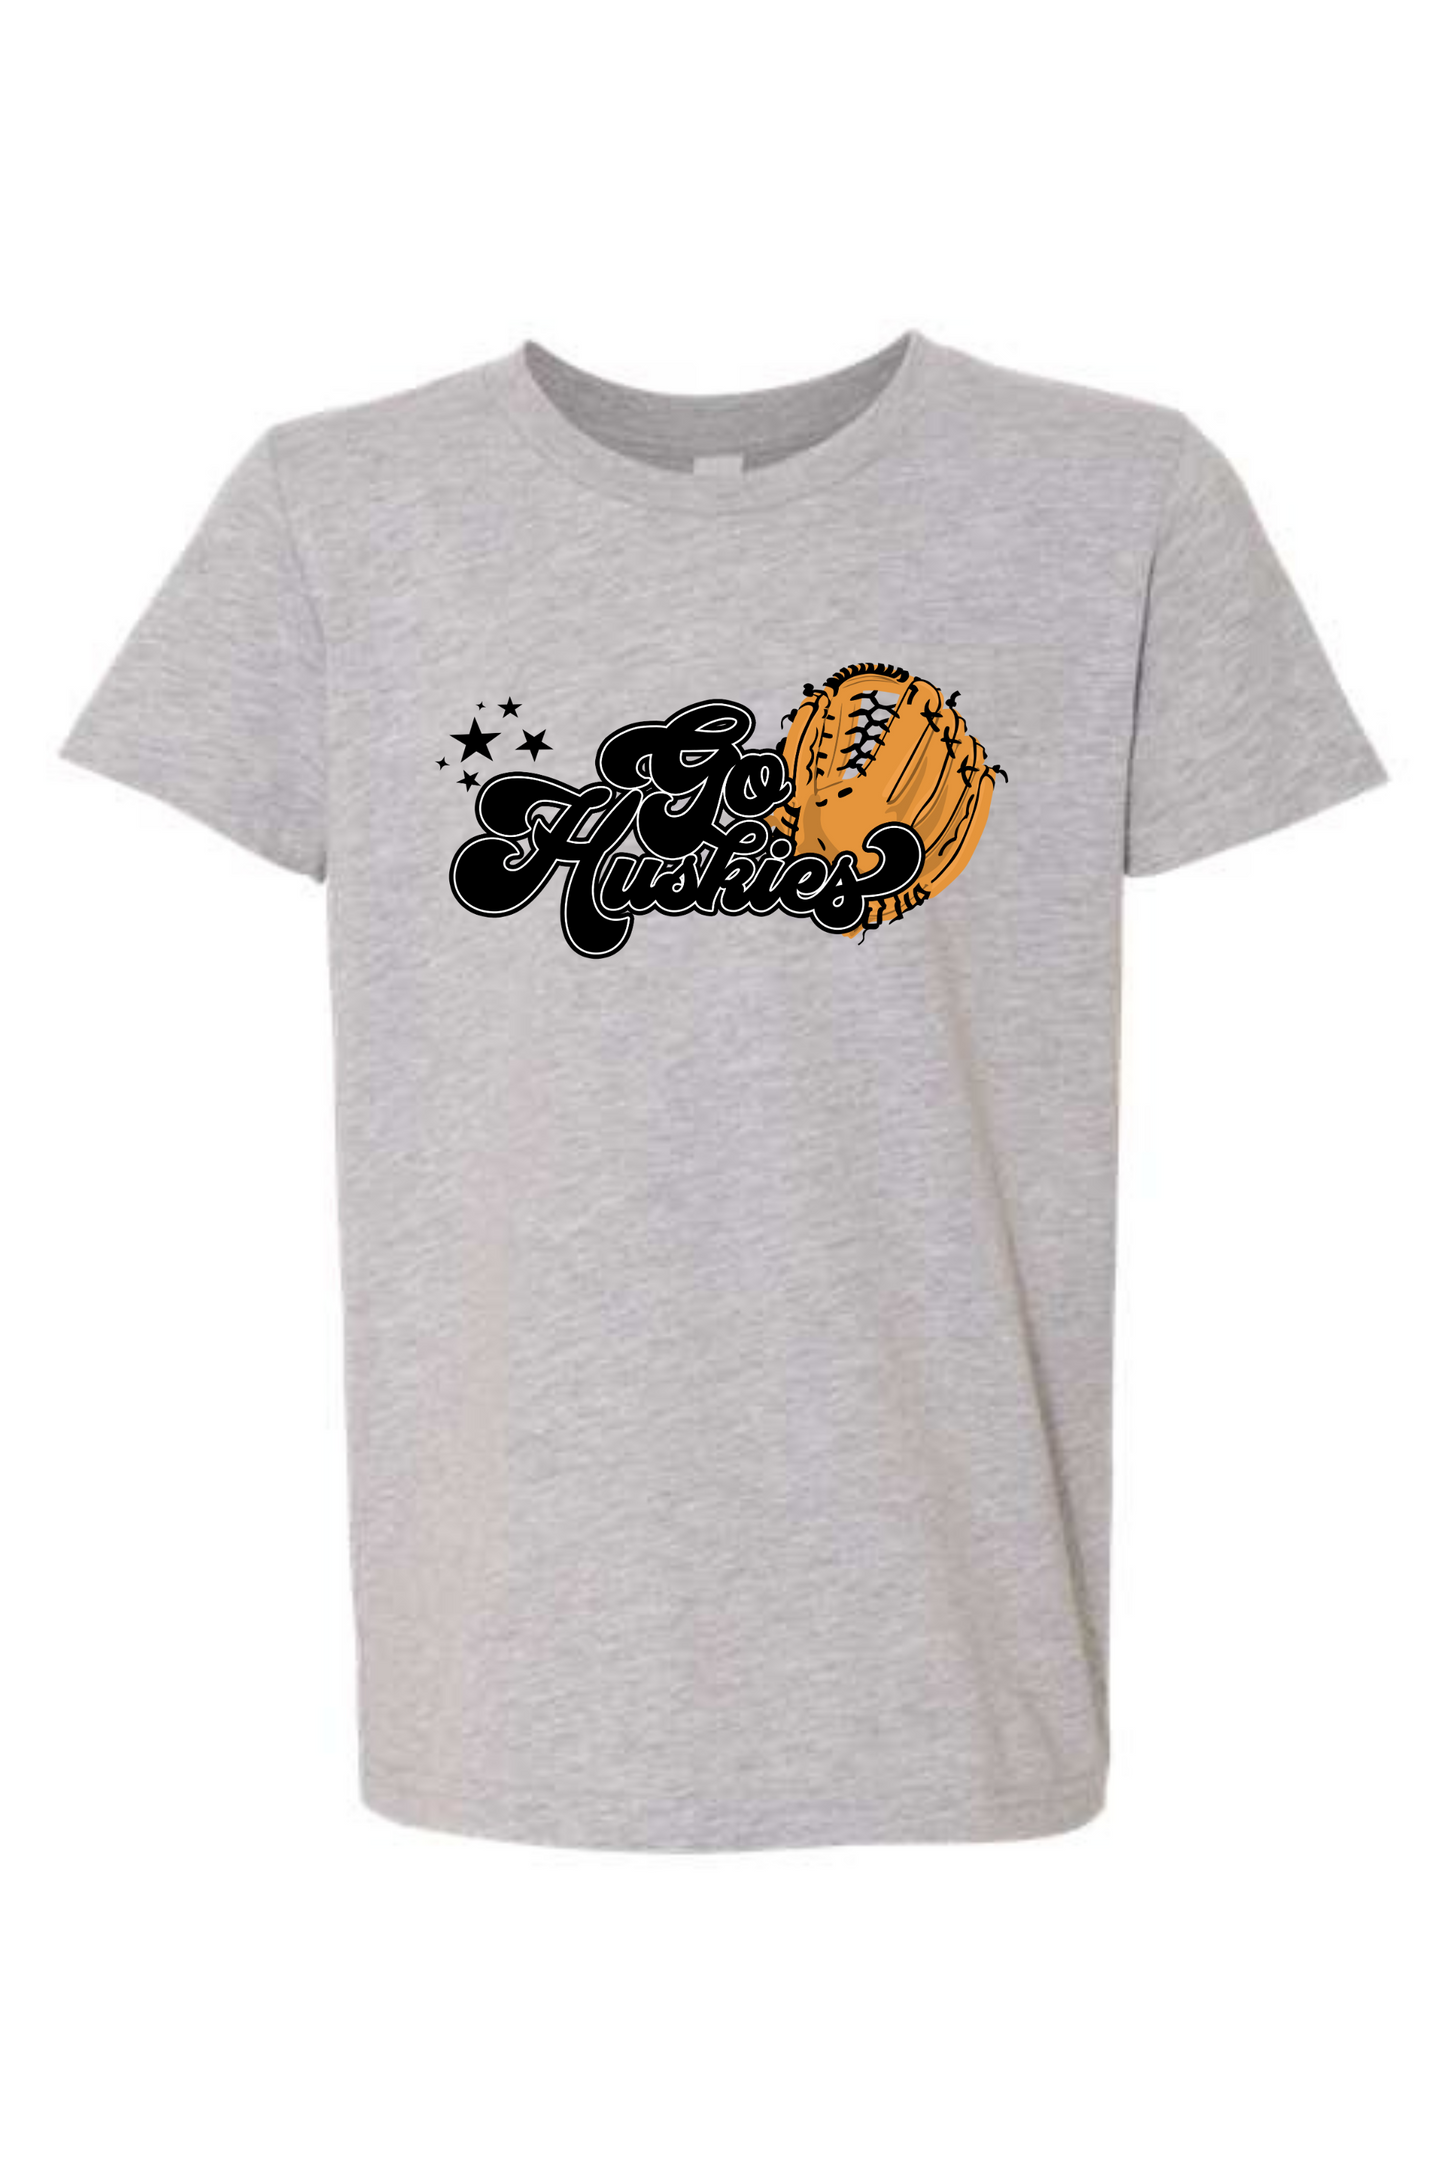 Go Huskies Groovy Glove | Kids Tee-Kids Tees-Sister Shirts-Sister Shirts, Cute & Custom Tees for Mama & Littles in Trussville, Alabama.